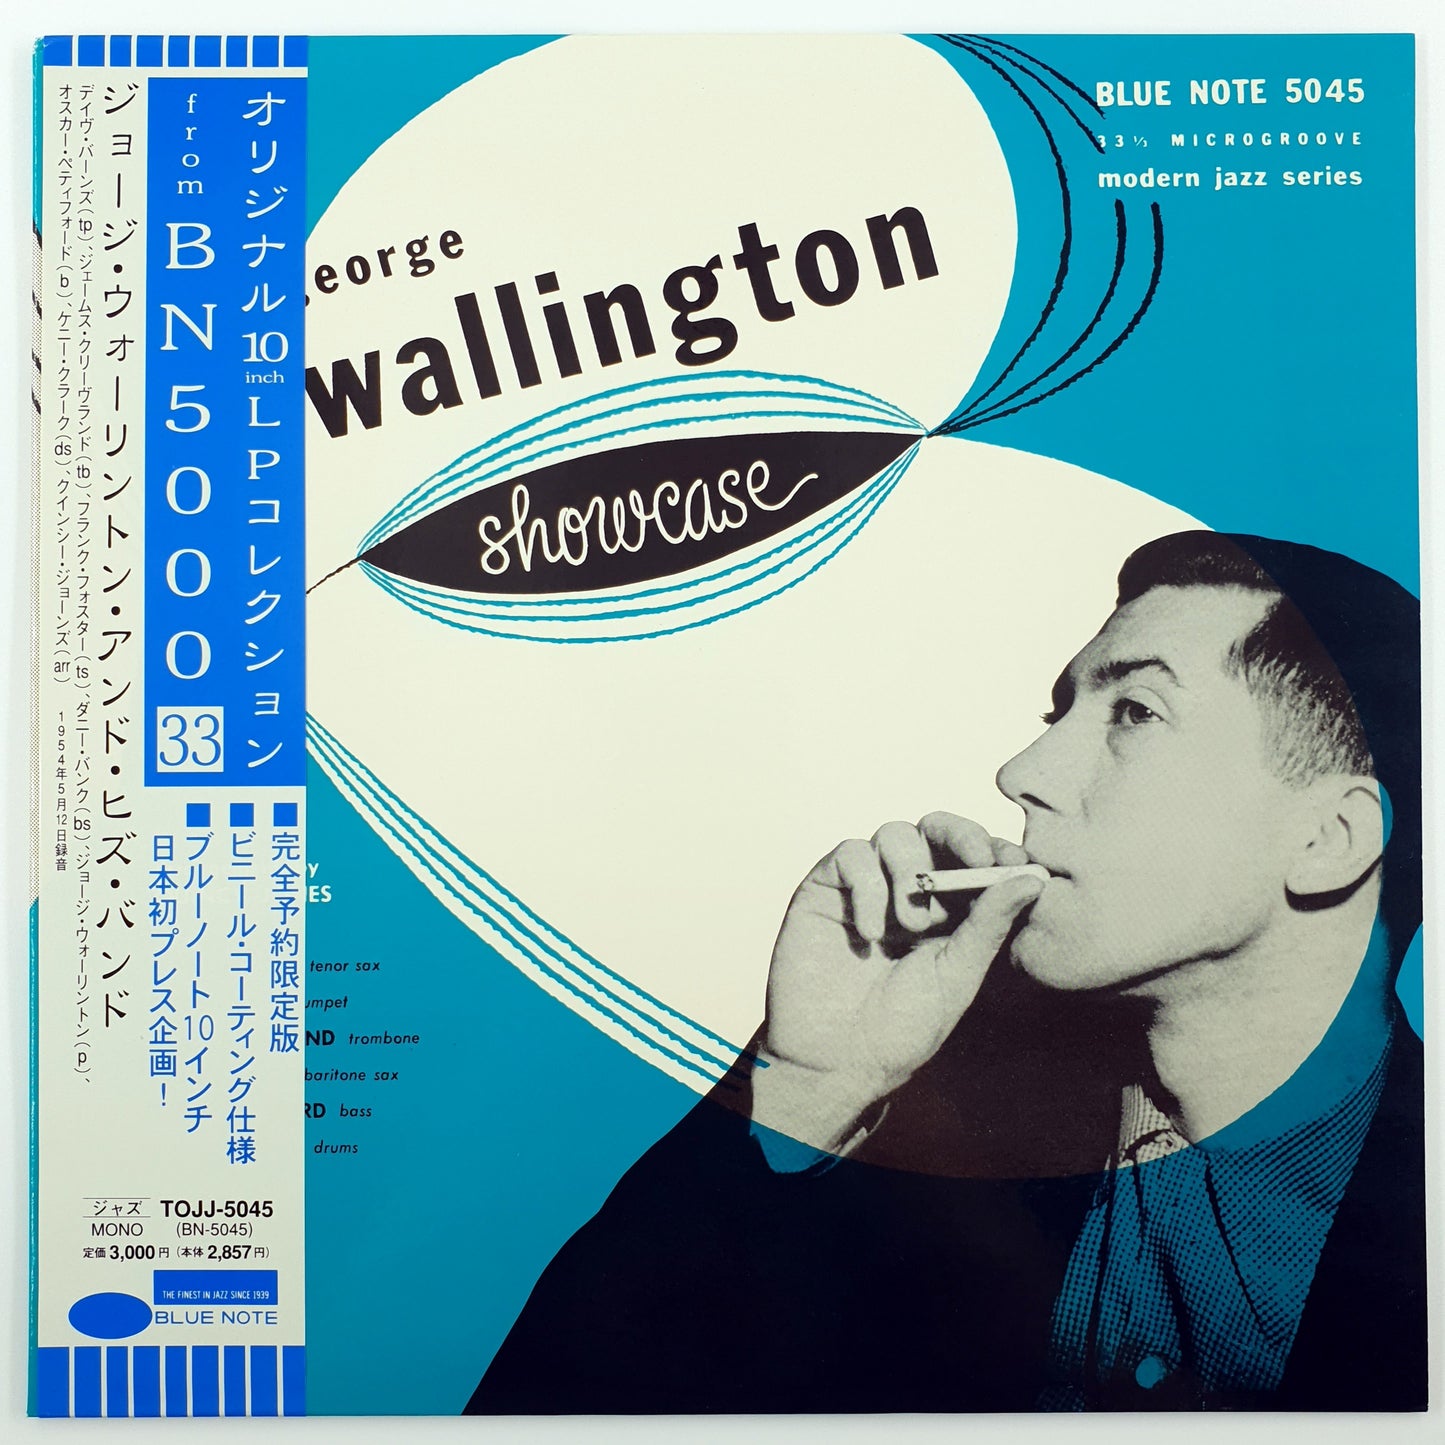 George Wallington And His Band – George Wallington Showcase